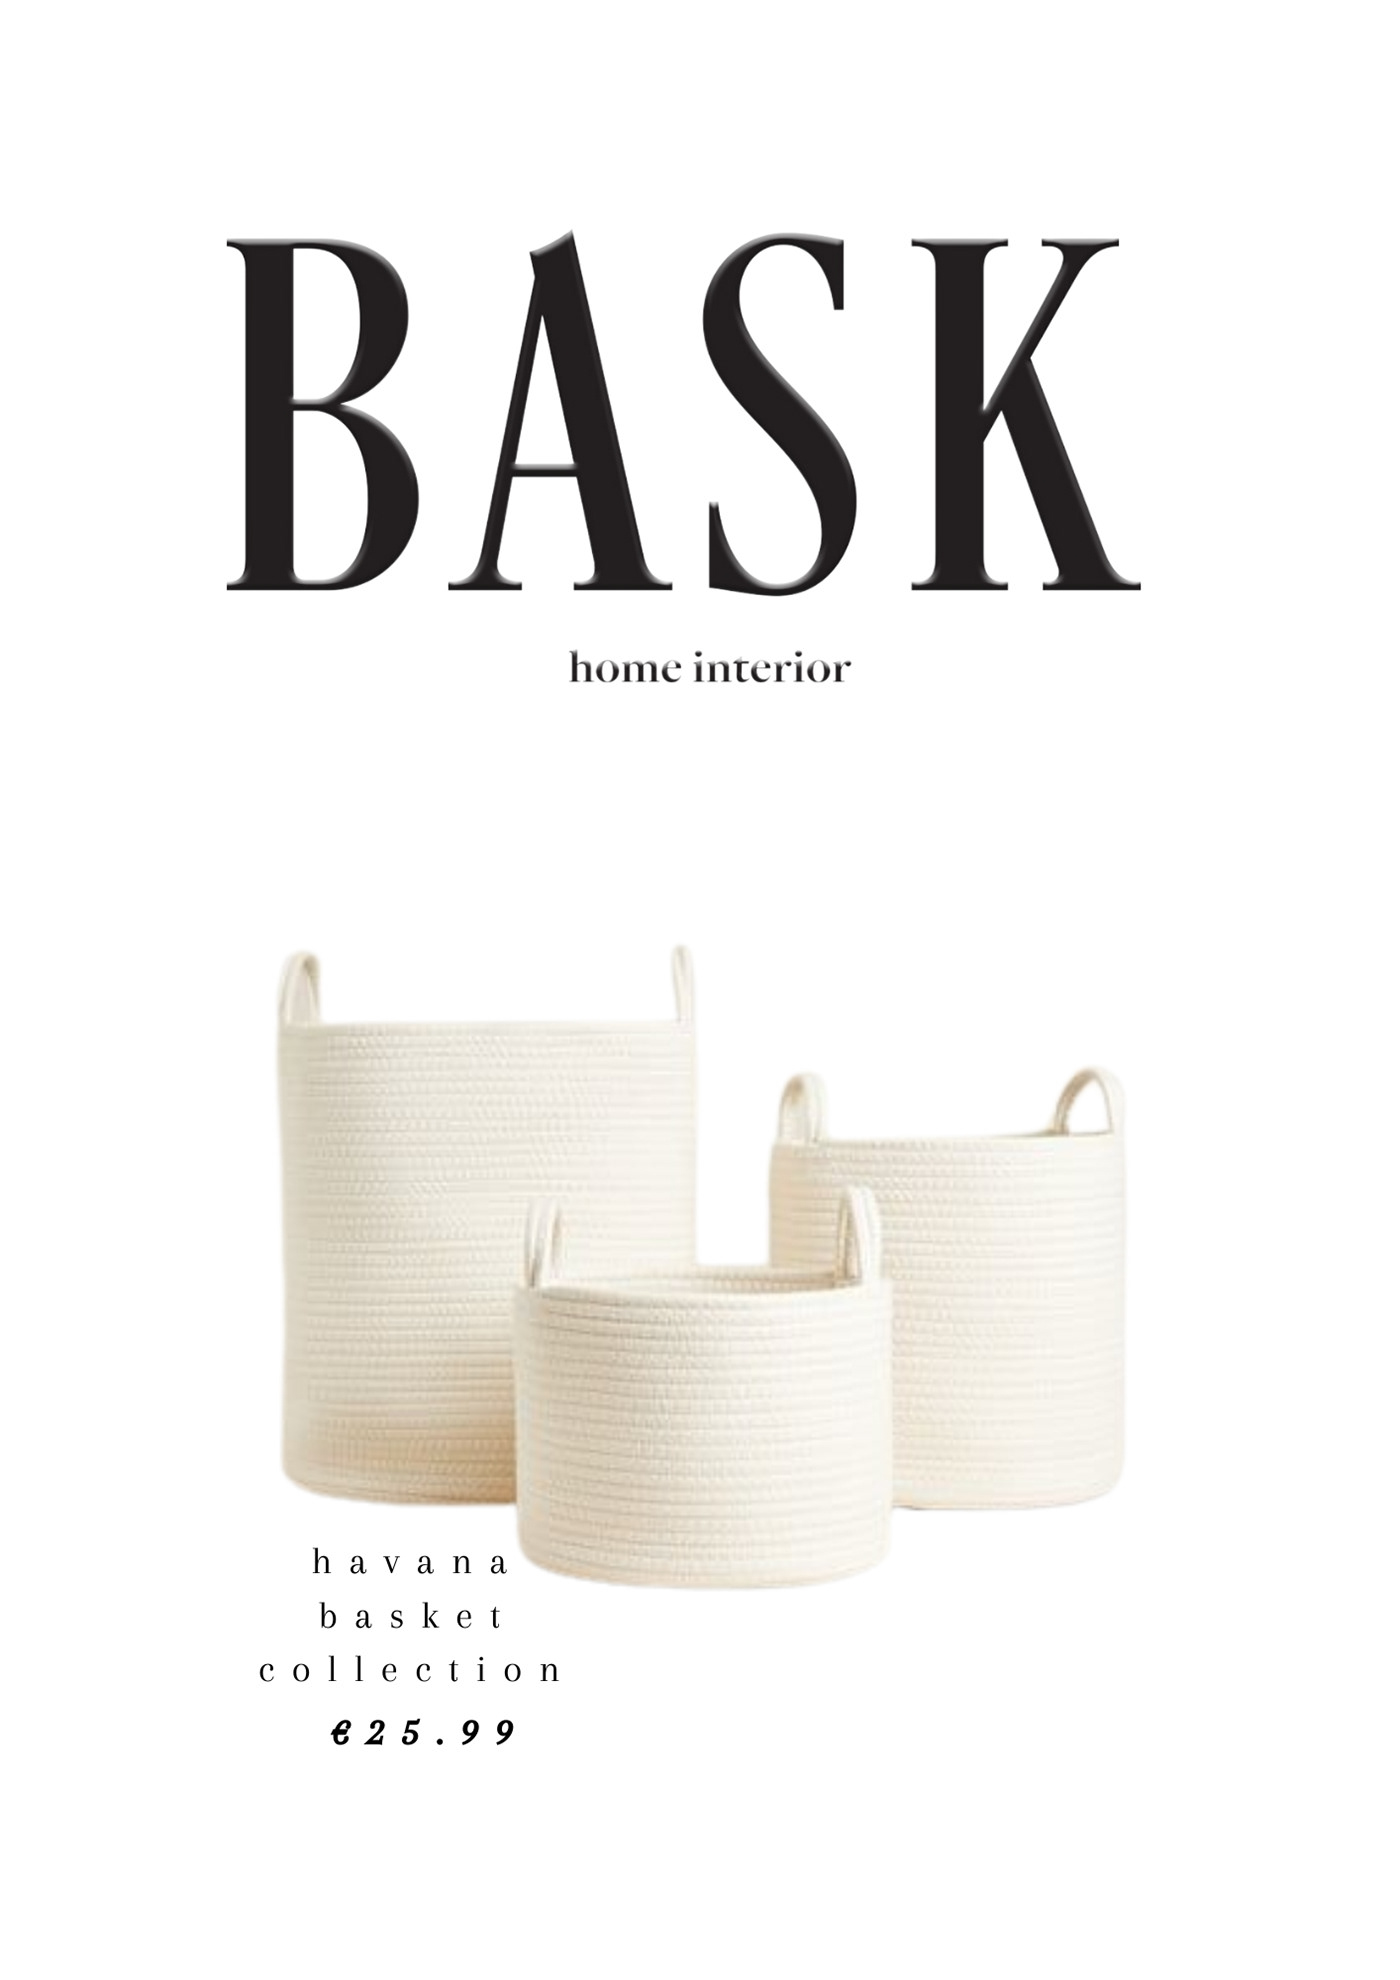 Basic logo magazine page 
for basket advertisment 